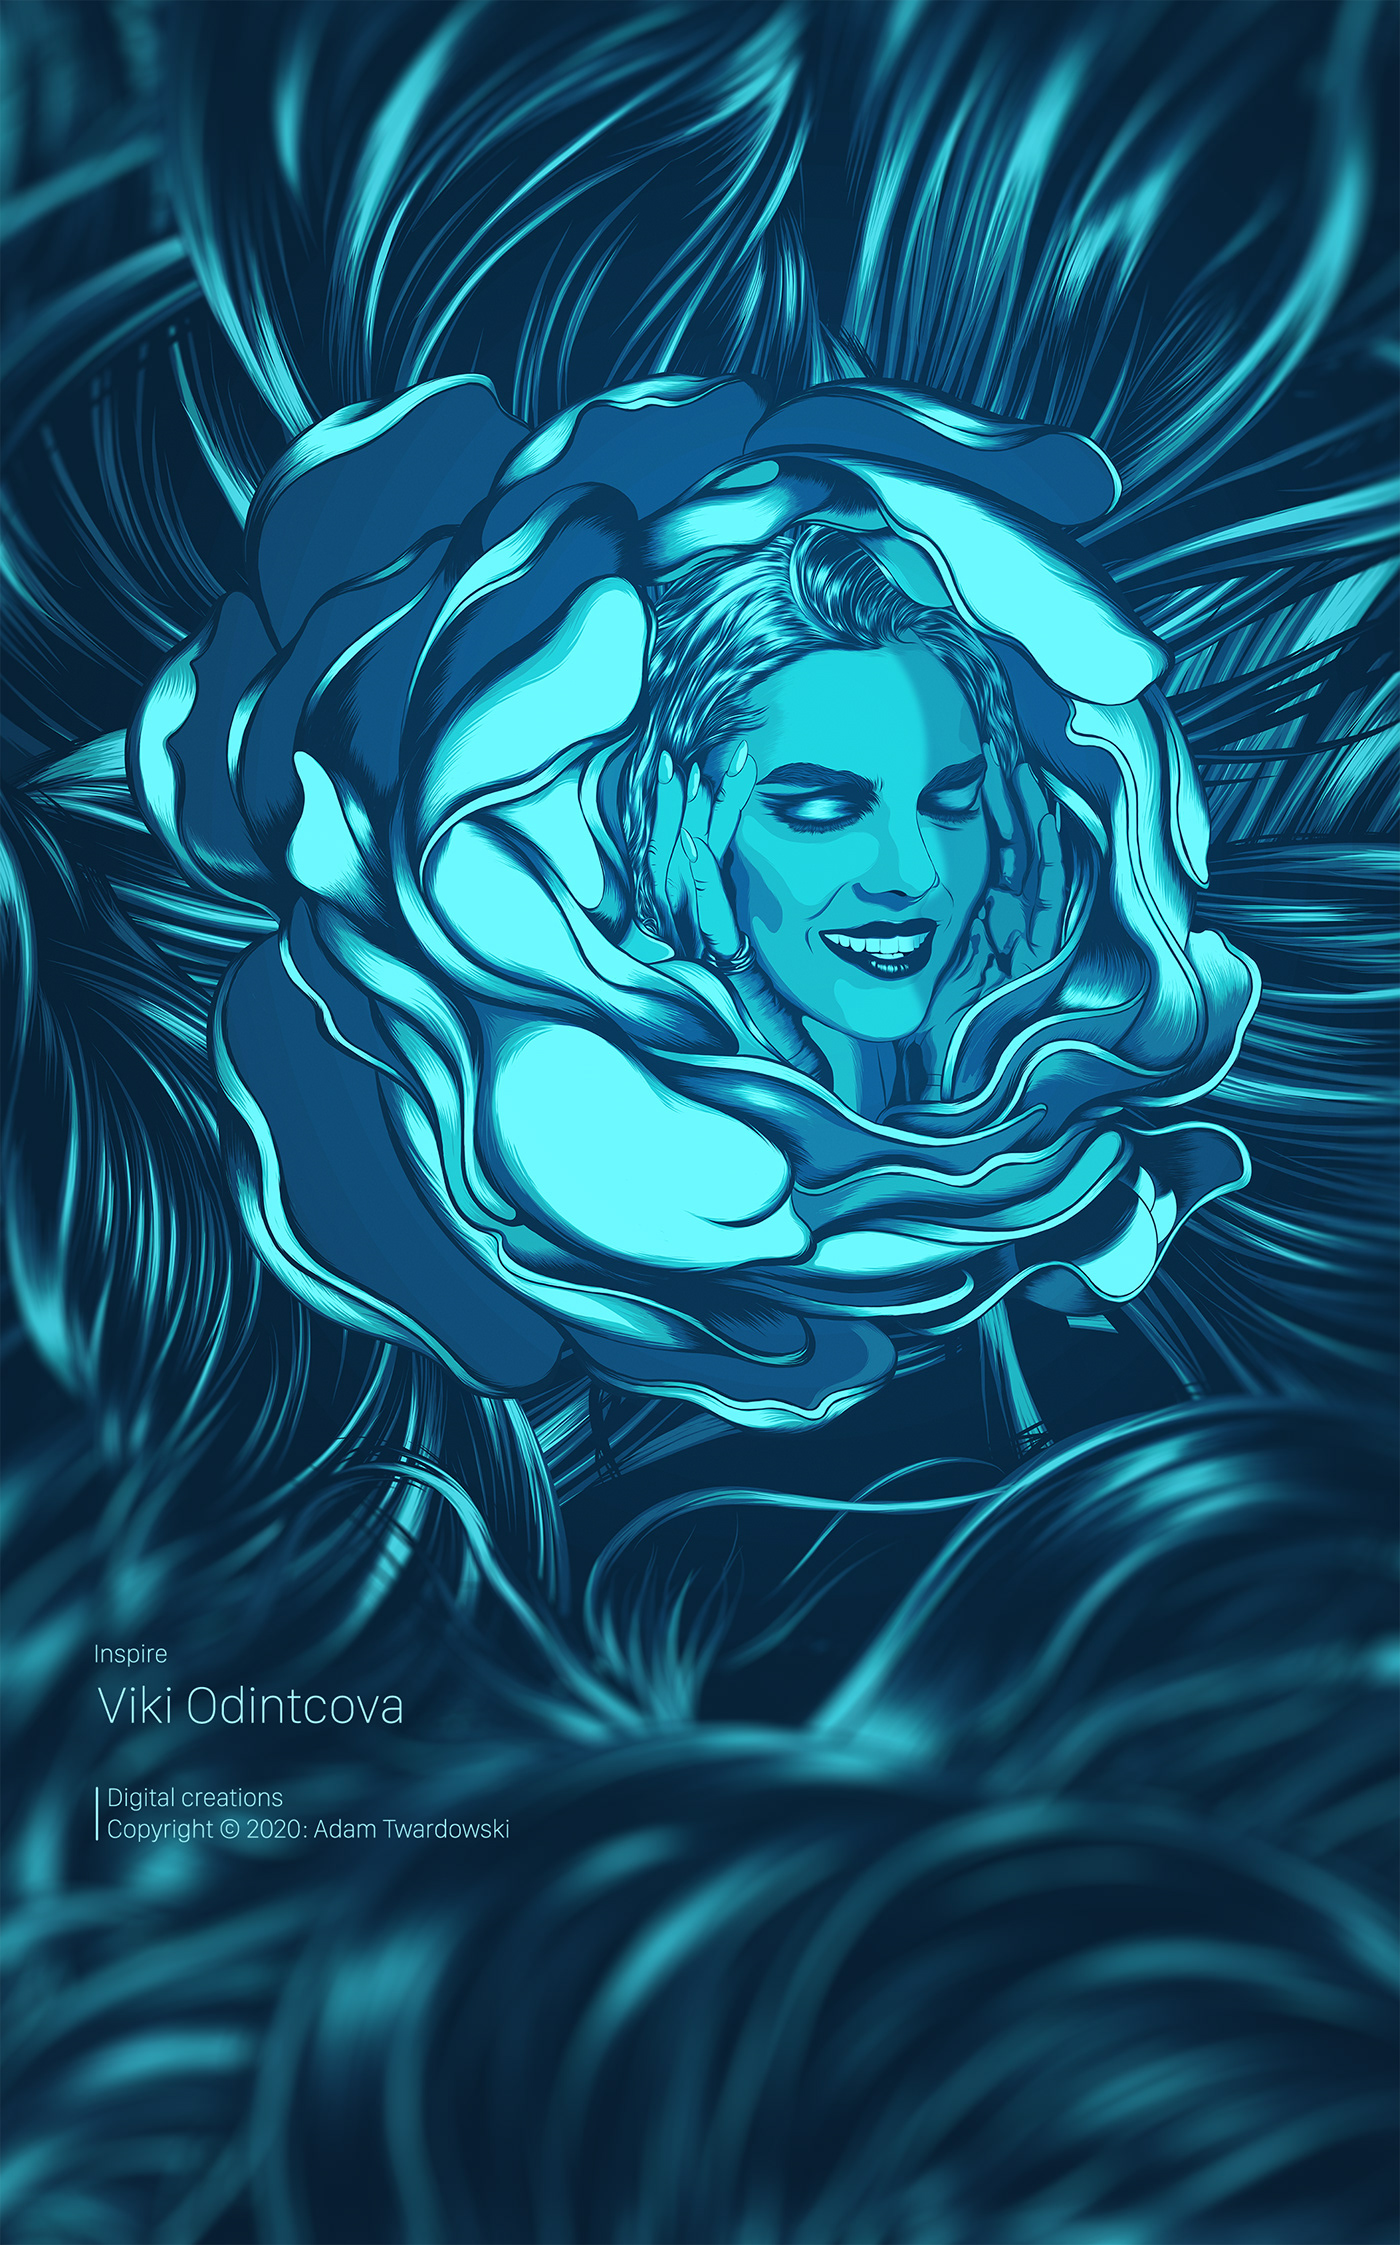 vectors Odintcova Viki blue ILLUSTRATION  lazure model waves portrait adobedraw